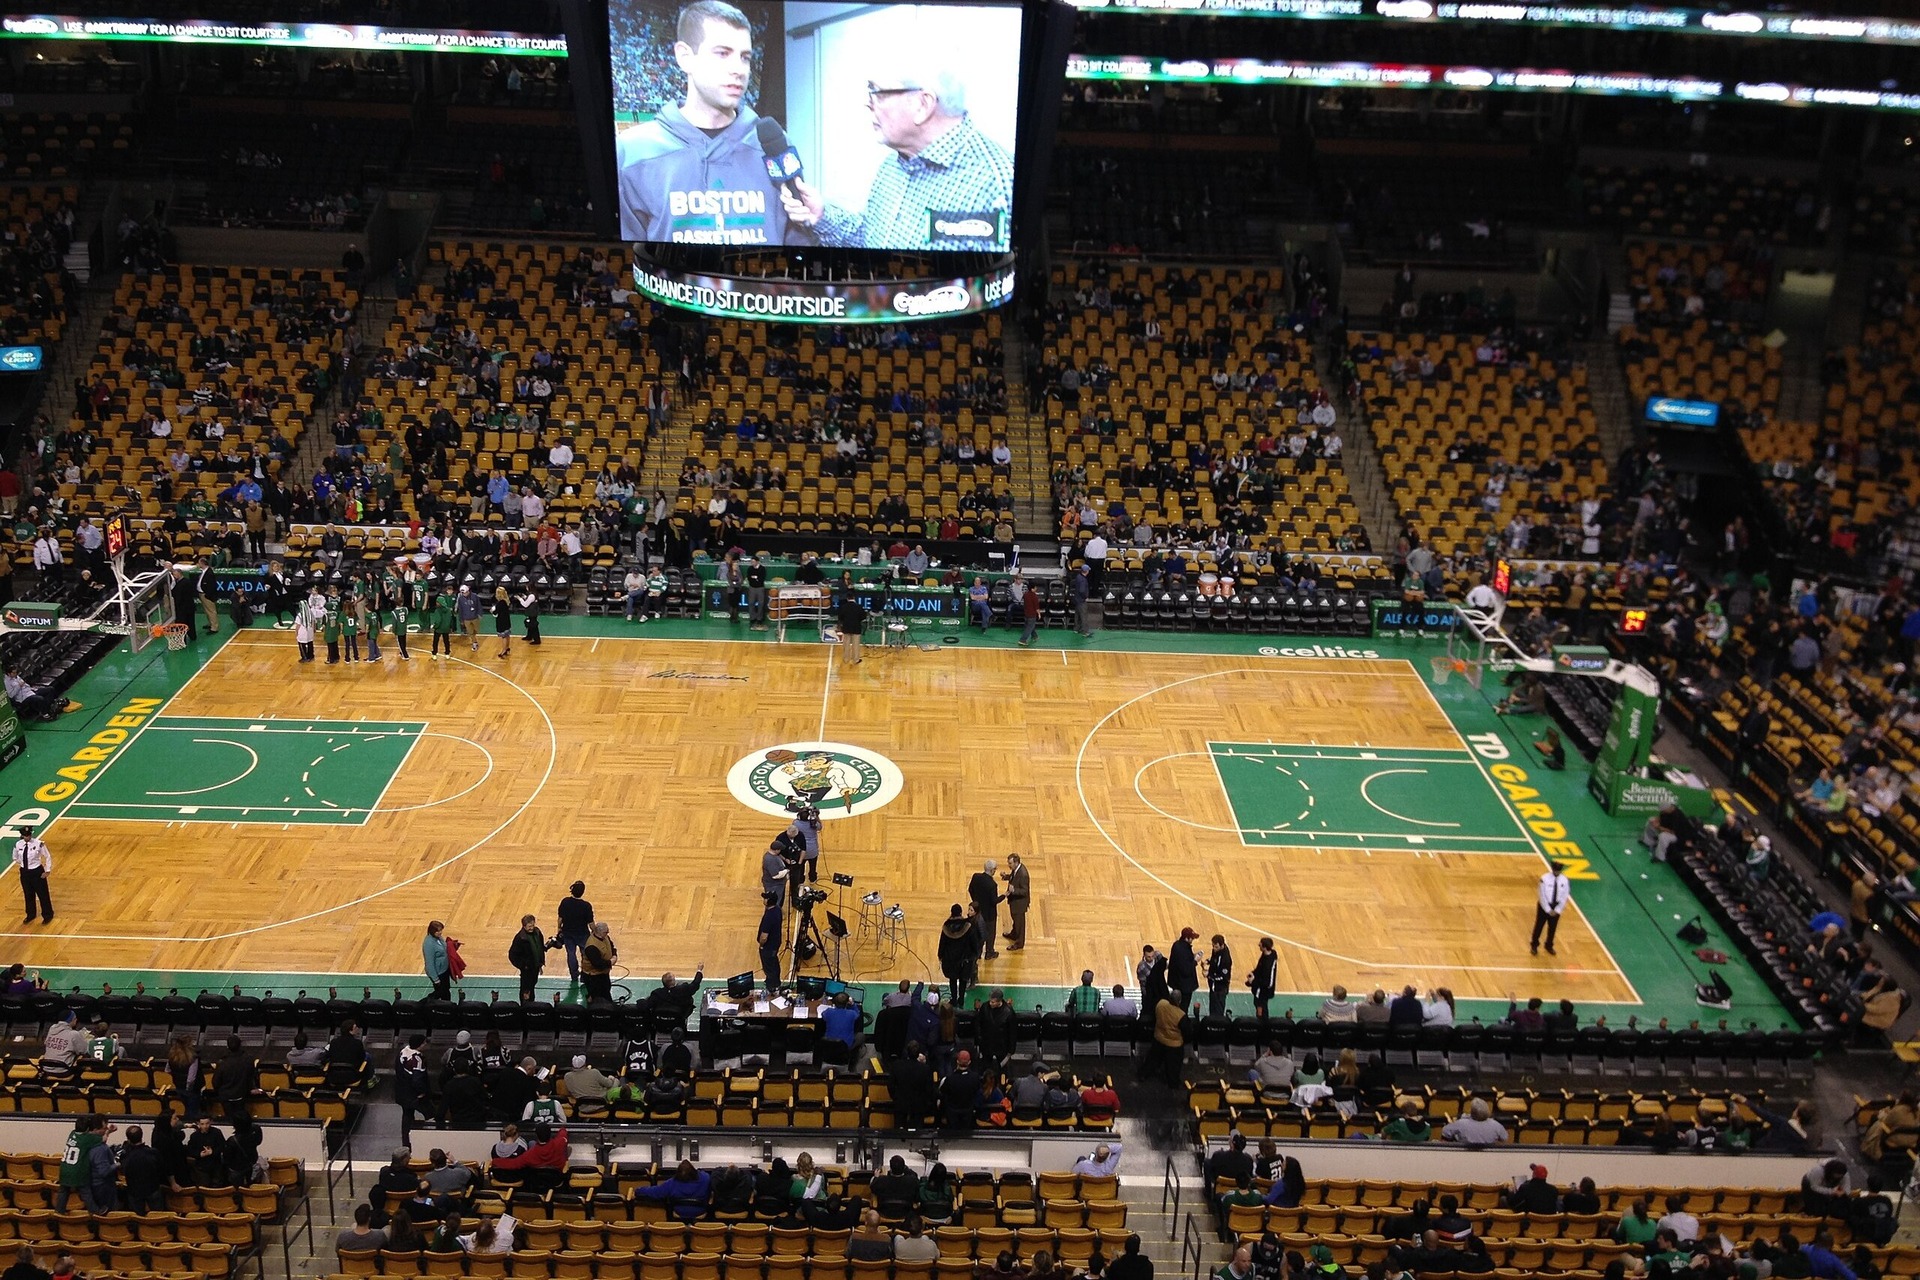 TD Garden, home stadium of the Boston Celtics